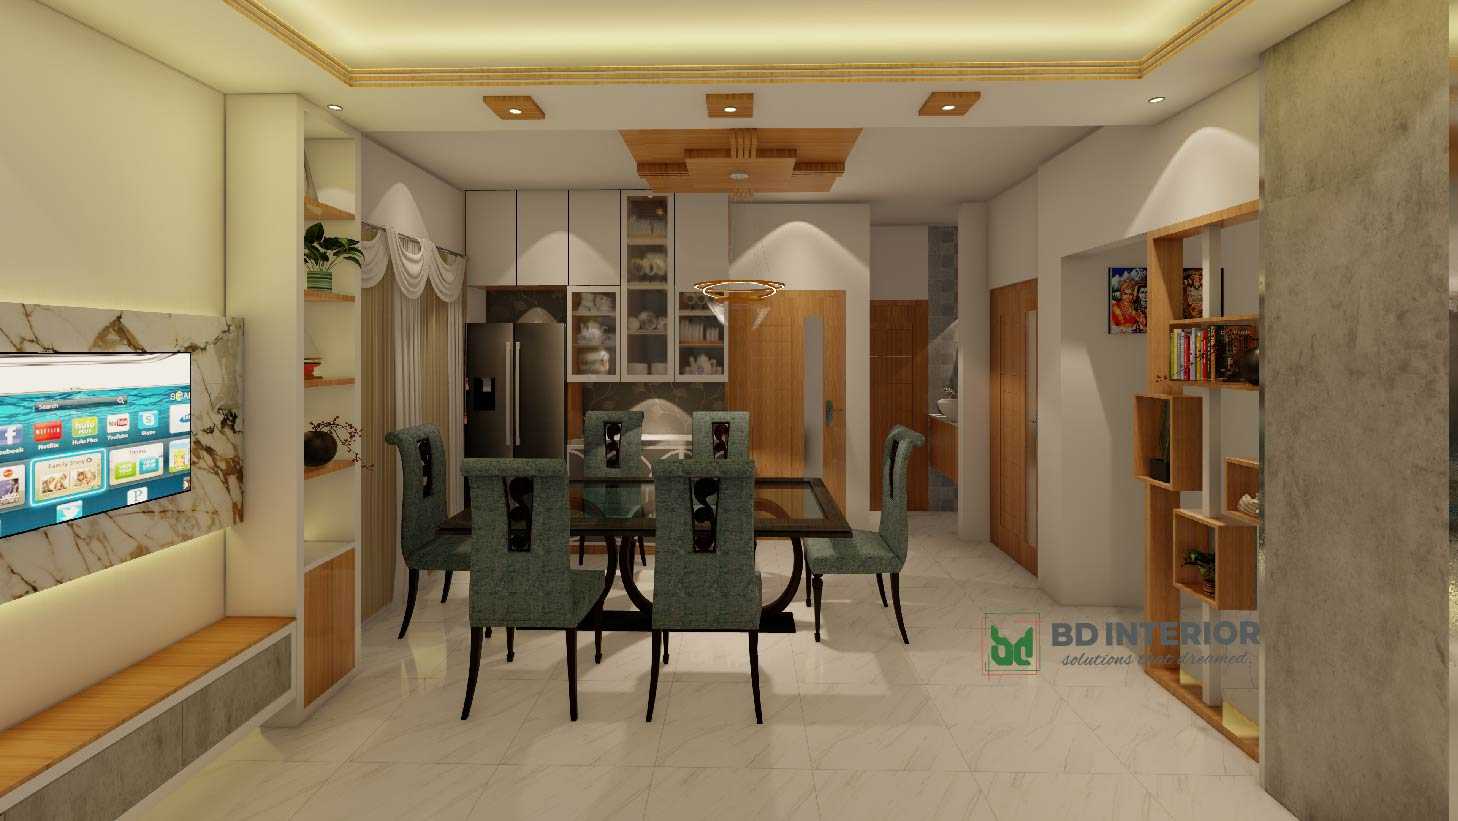 interior design for dining room decoration